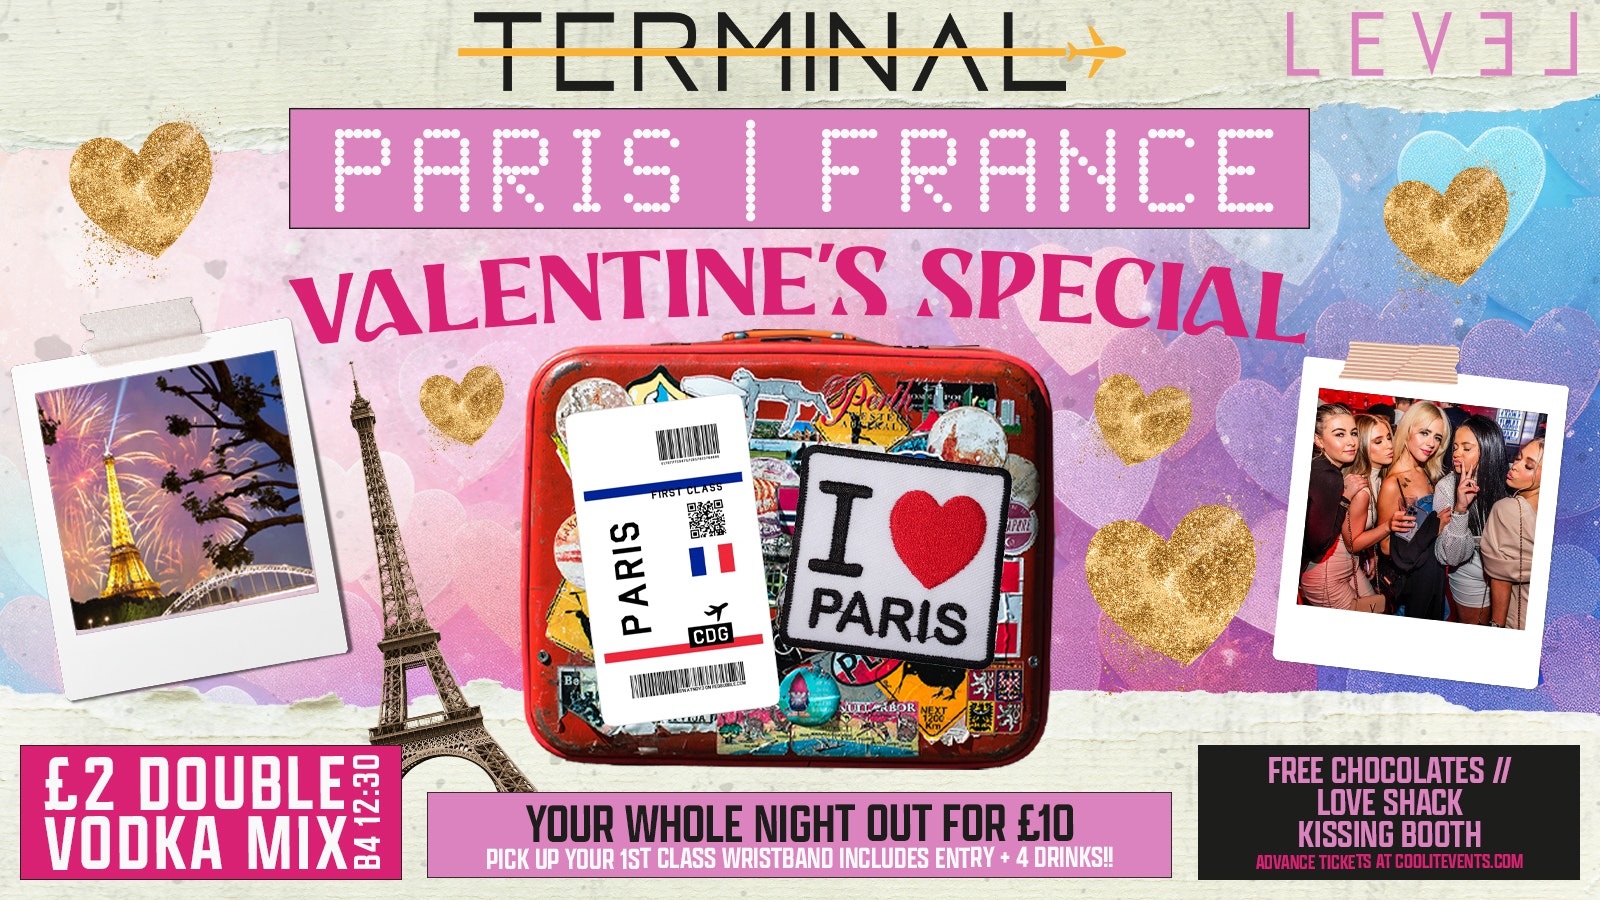 TERMINAL Wednesdays : PARIS VALENTINE’S SPECIAL- £2 DOUBLES!